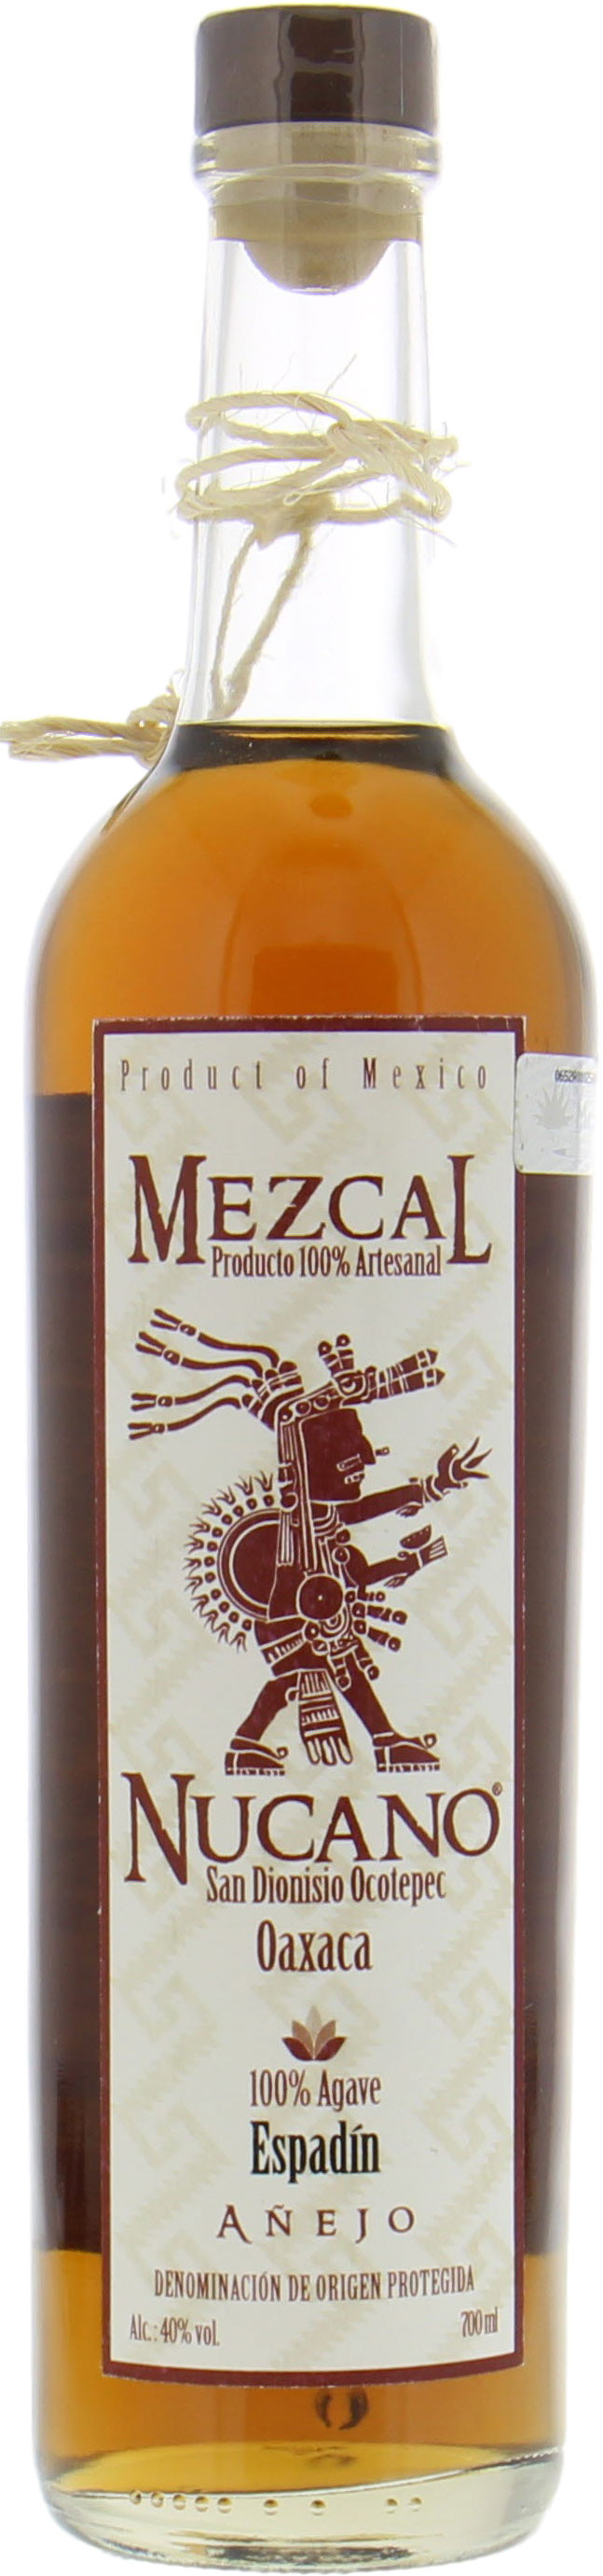 Nucano - Mezcal Nucano Espadin Anejo 100% Agave 40% NV Perfect